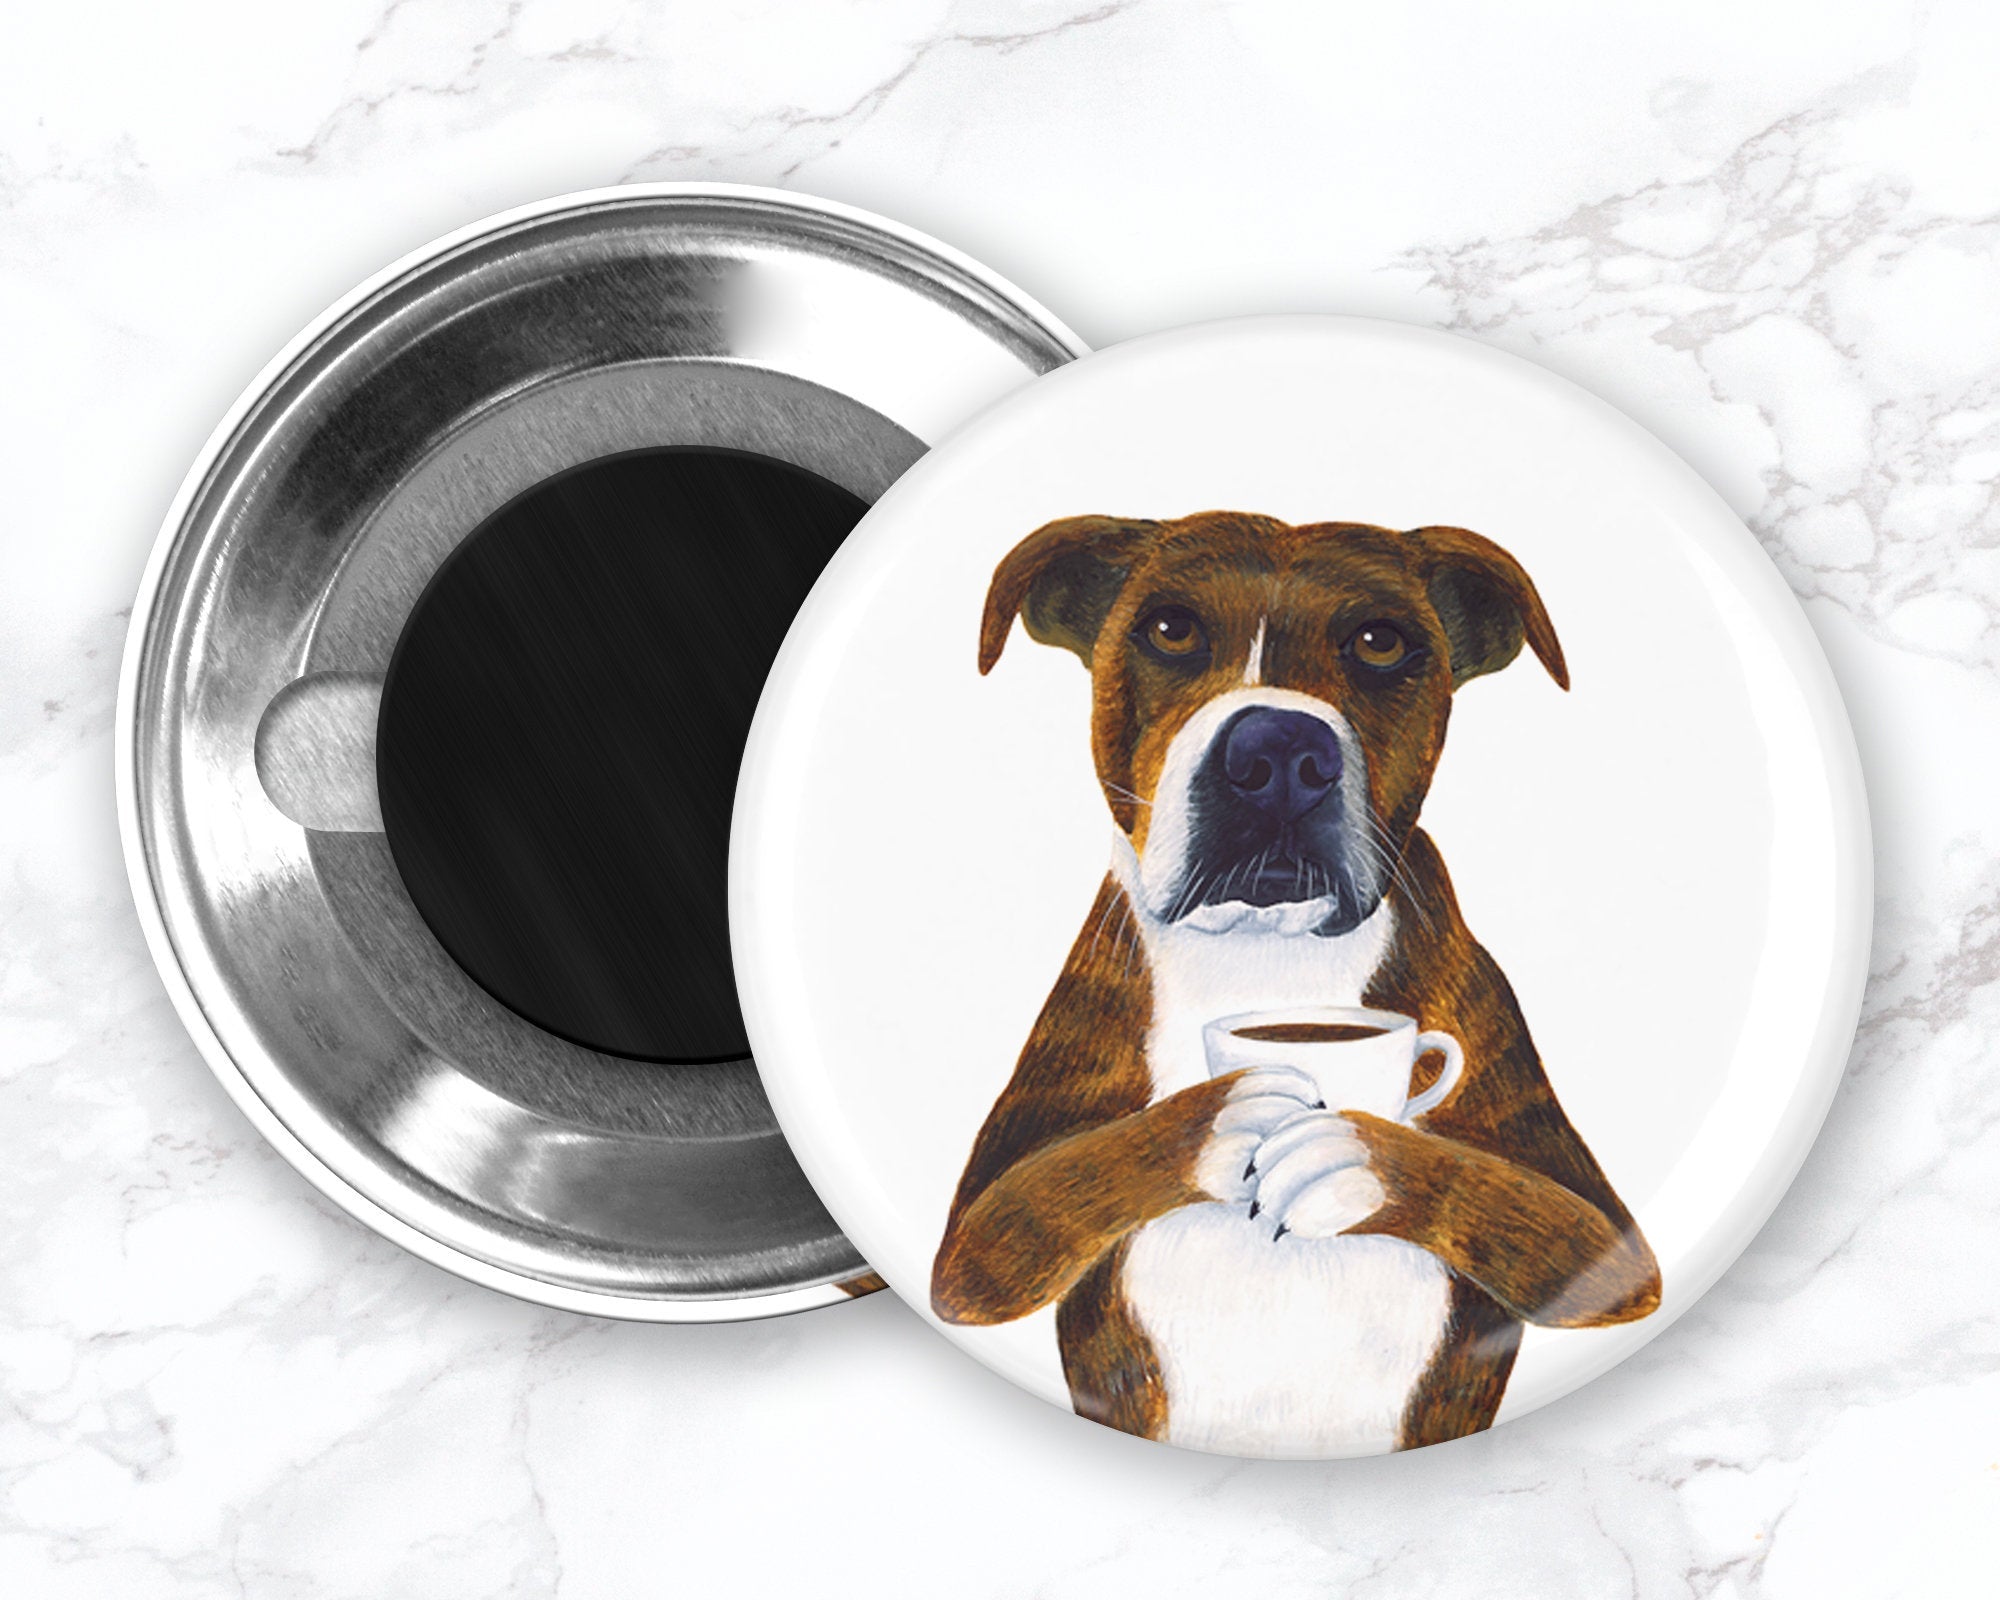 Dog With Coffee Magnet, Dog Fridge Magnet, Funny Dog Magnet, Refrigerator Magnets, Funny Fridge Magnets, Kitchen Decor, Animal Magnet